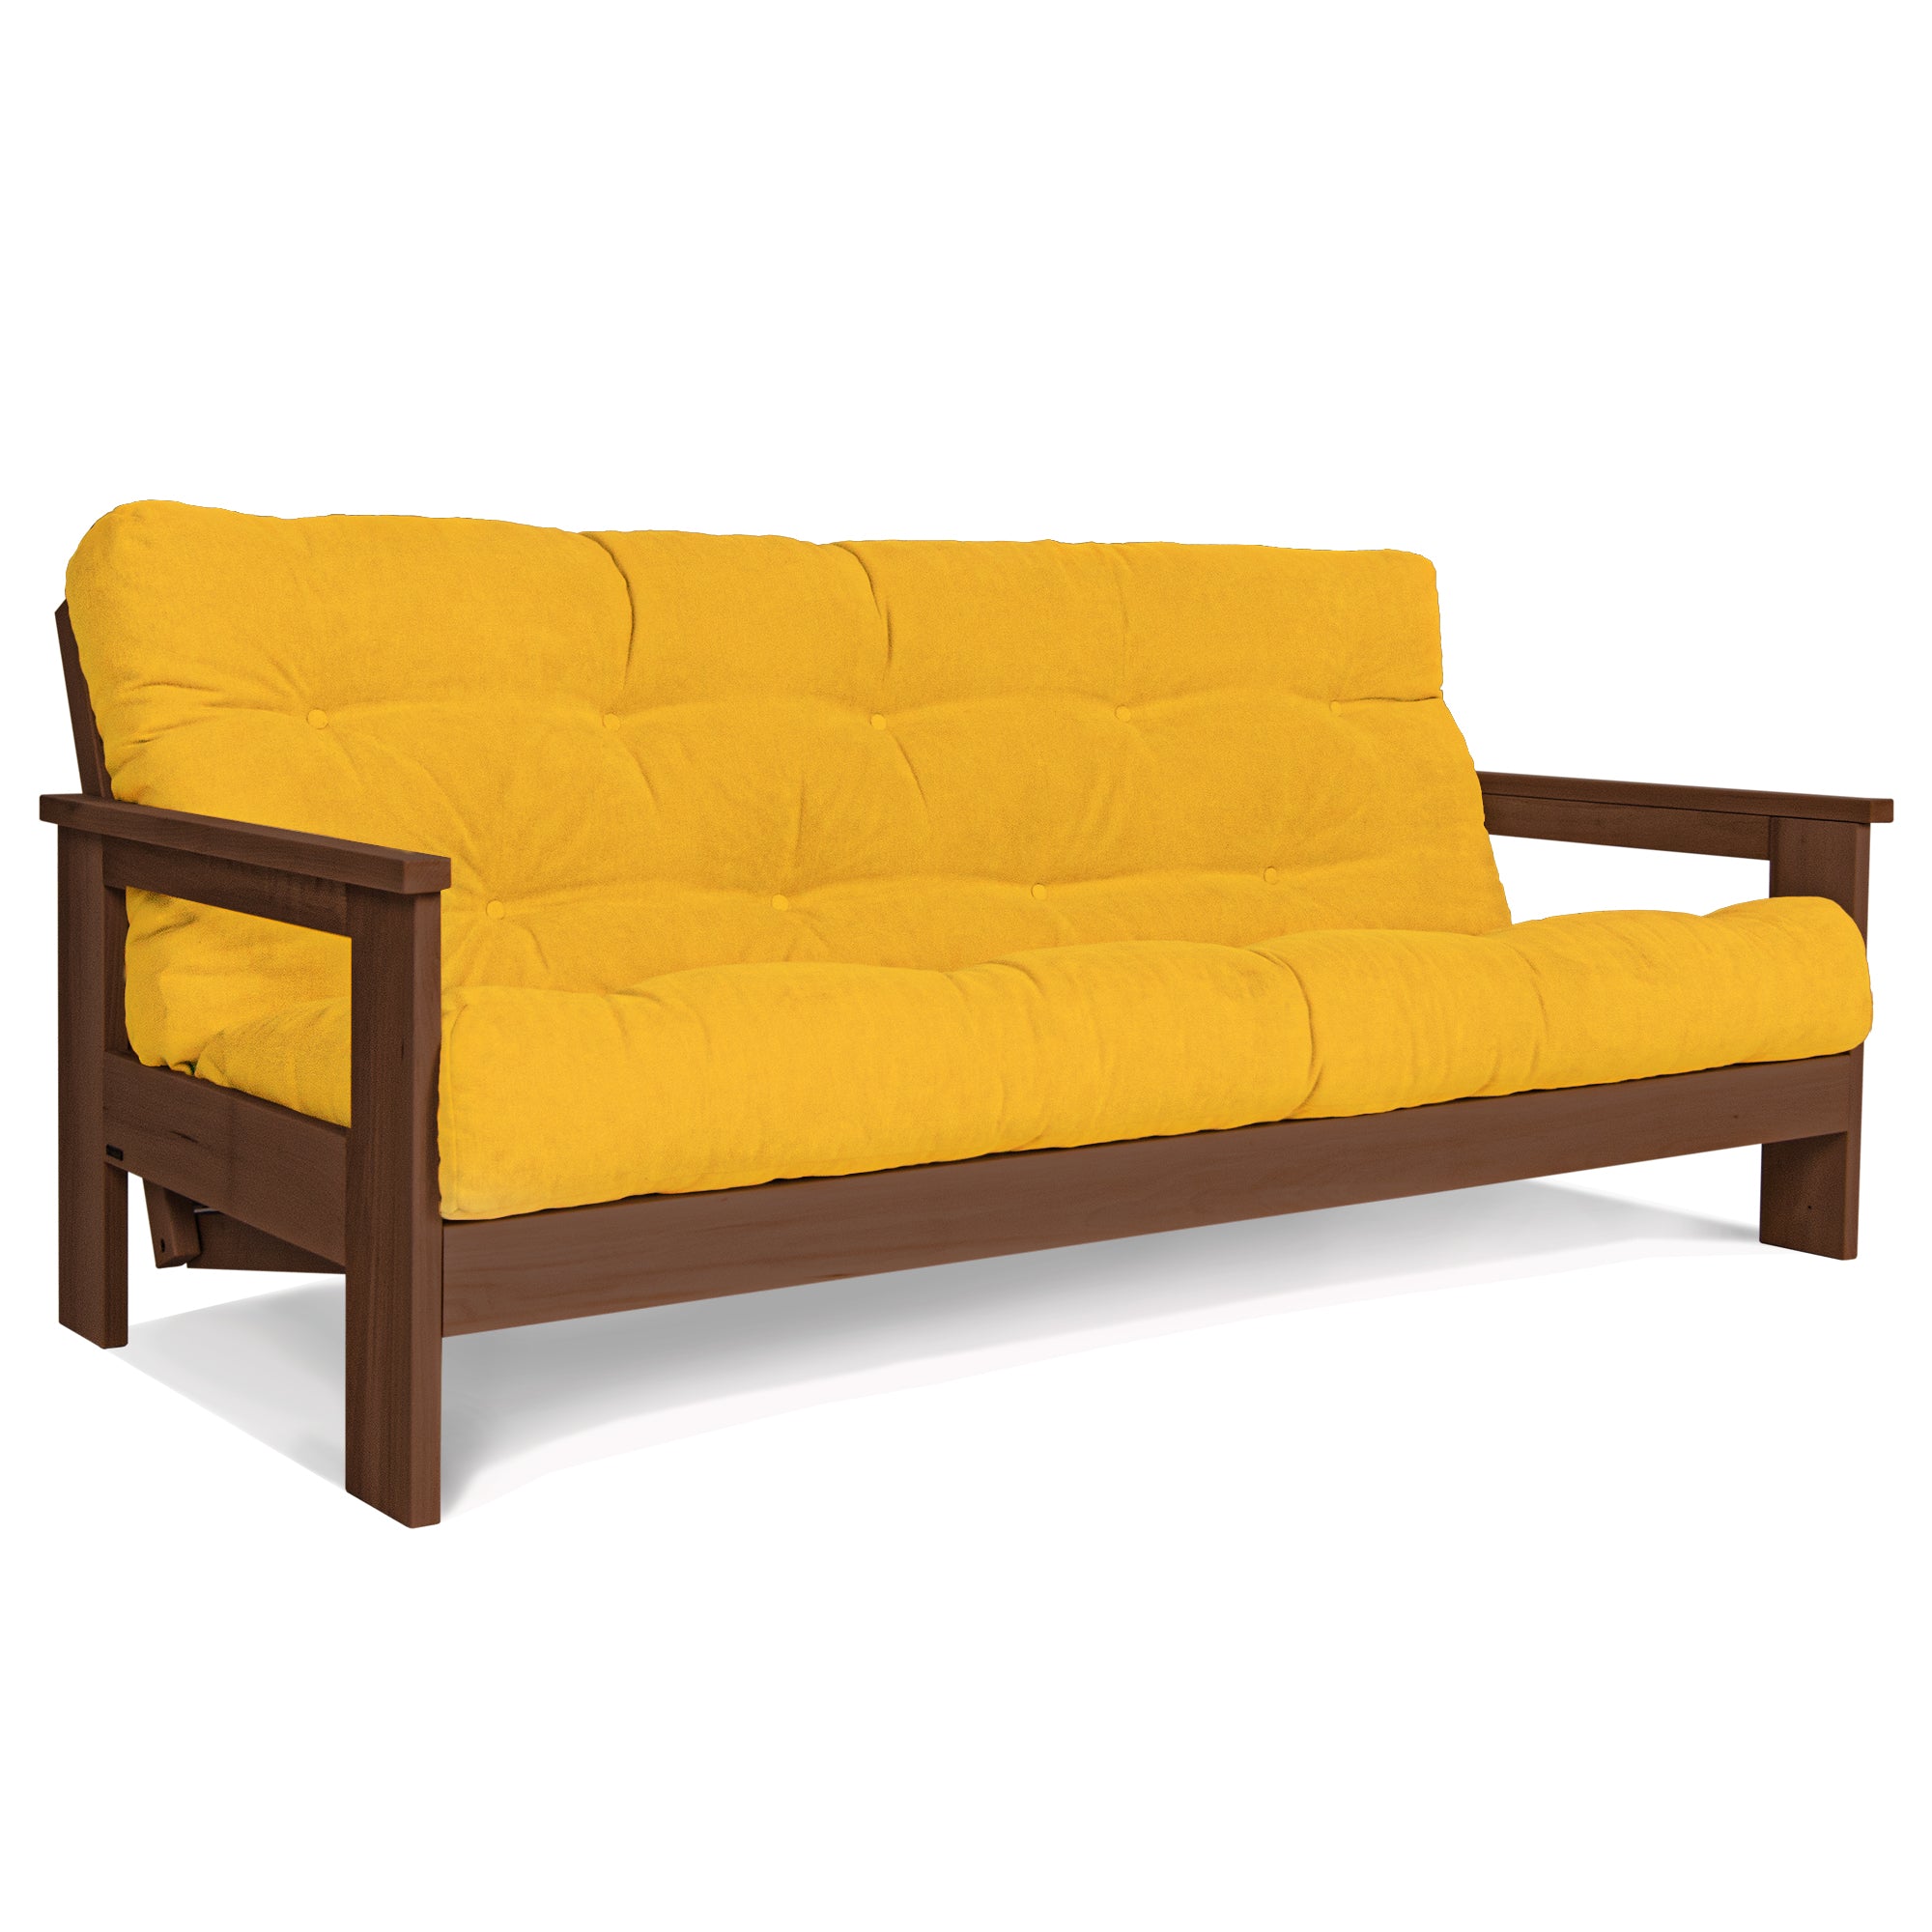 MEXICO Folding Sofa Bed-Beech Wood Frame-Walnut Colour-gray fabric colour-yellow fabric colour